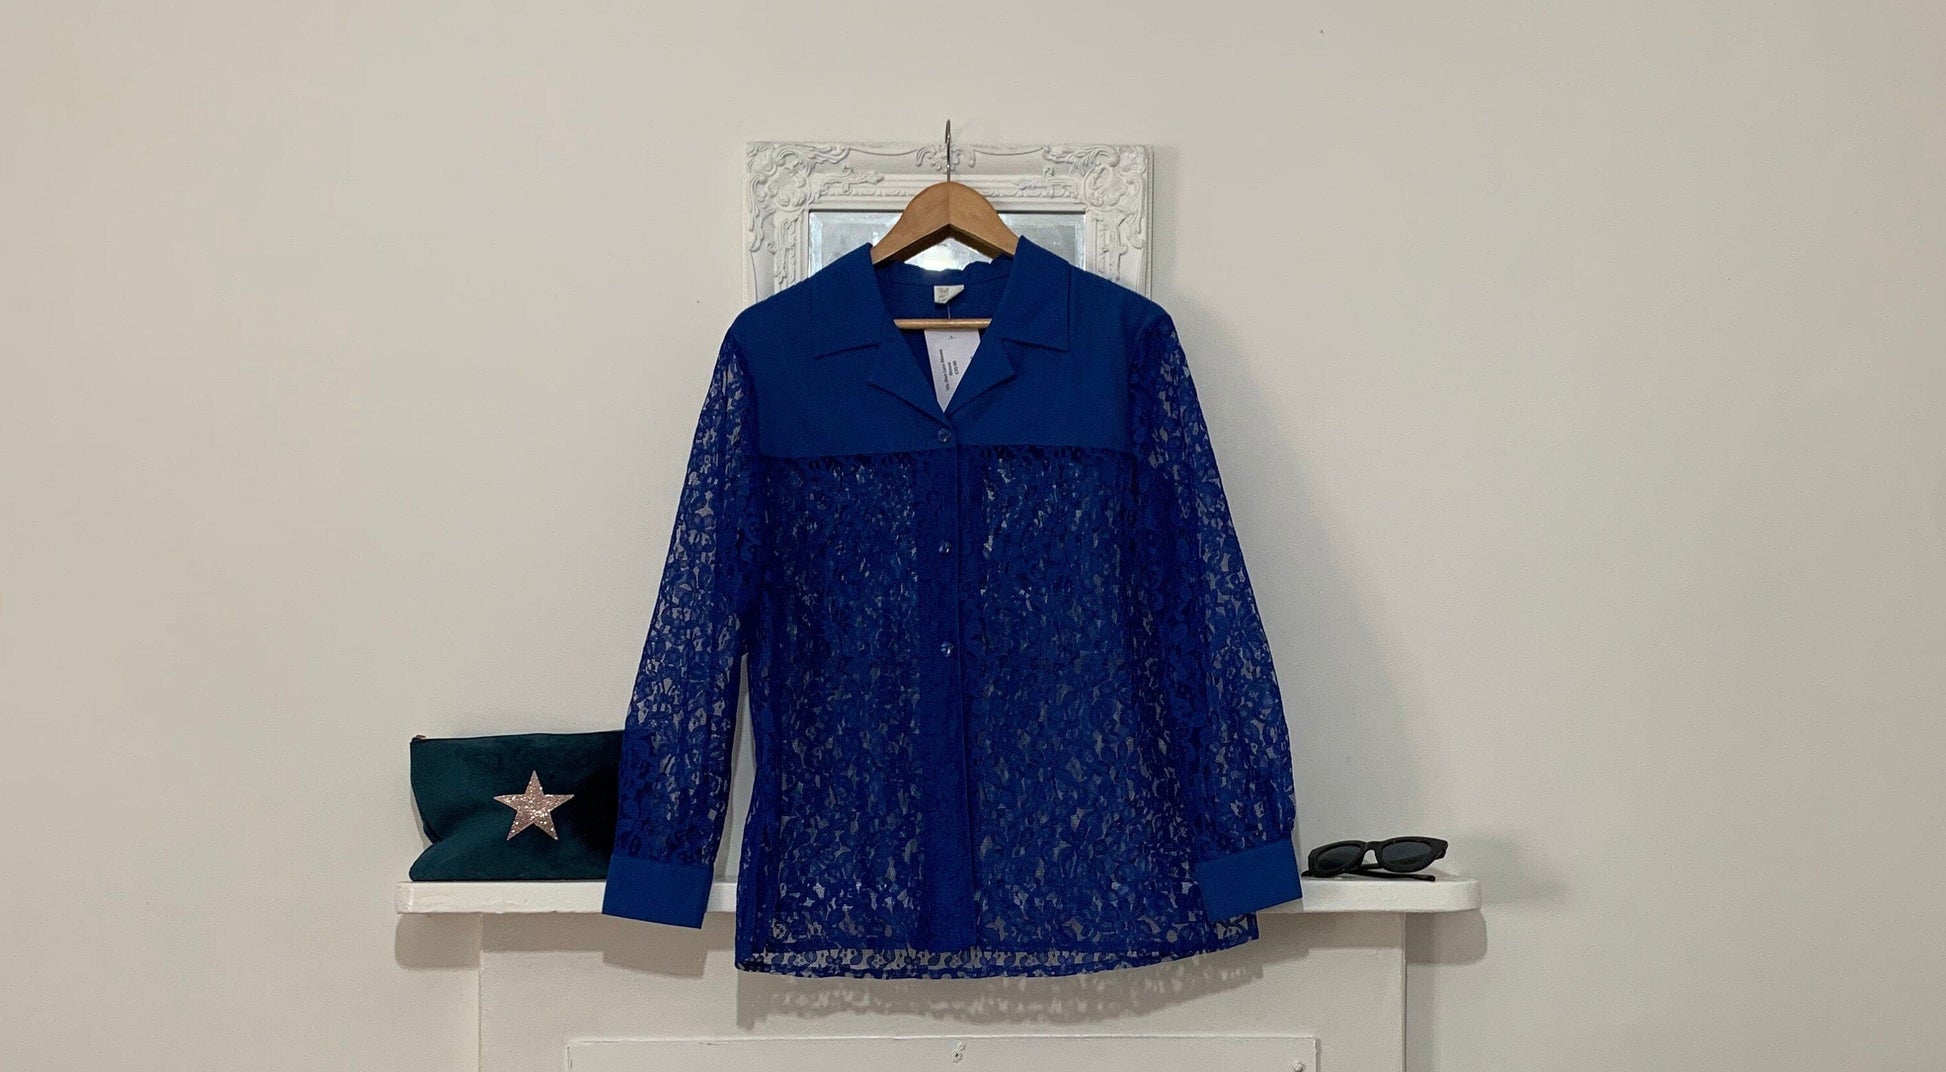 1970’s Vintage blouse 70s shirt lace electric blue pattern 50s style button through blouse collars rare plus size